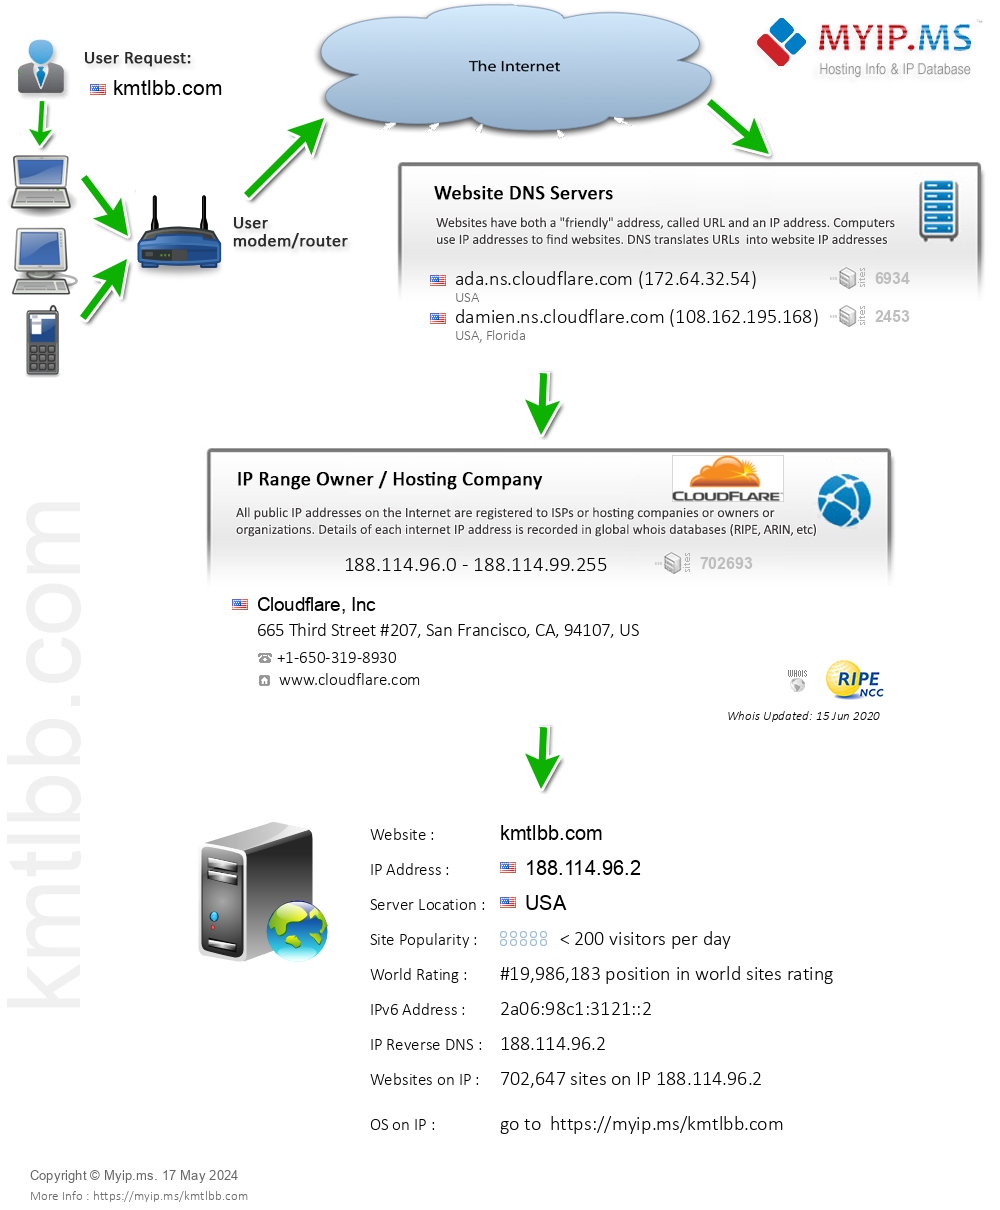 Kmtlbb.com - Website Hosting Visual IP Diagram